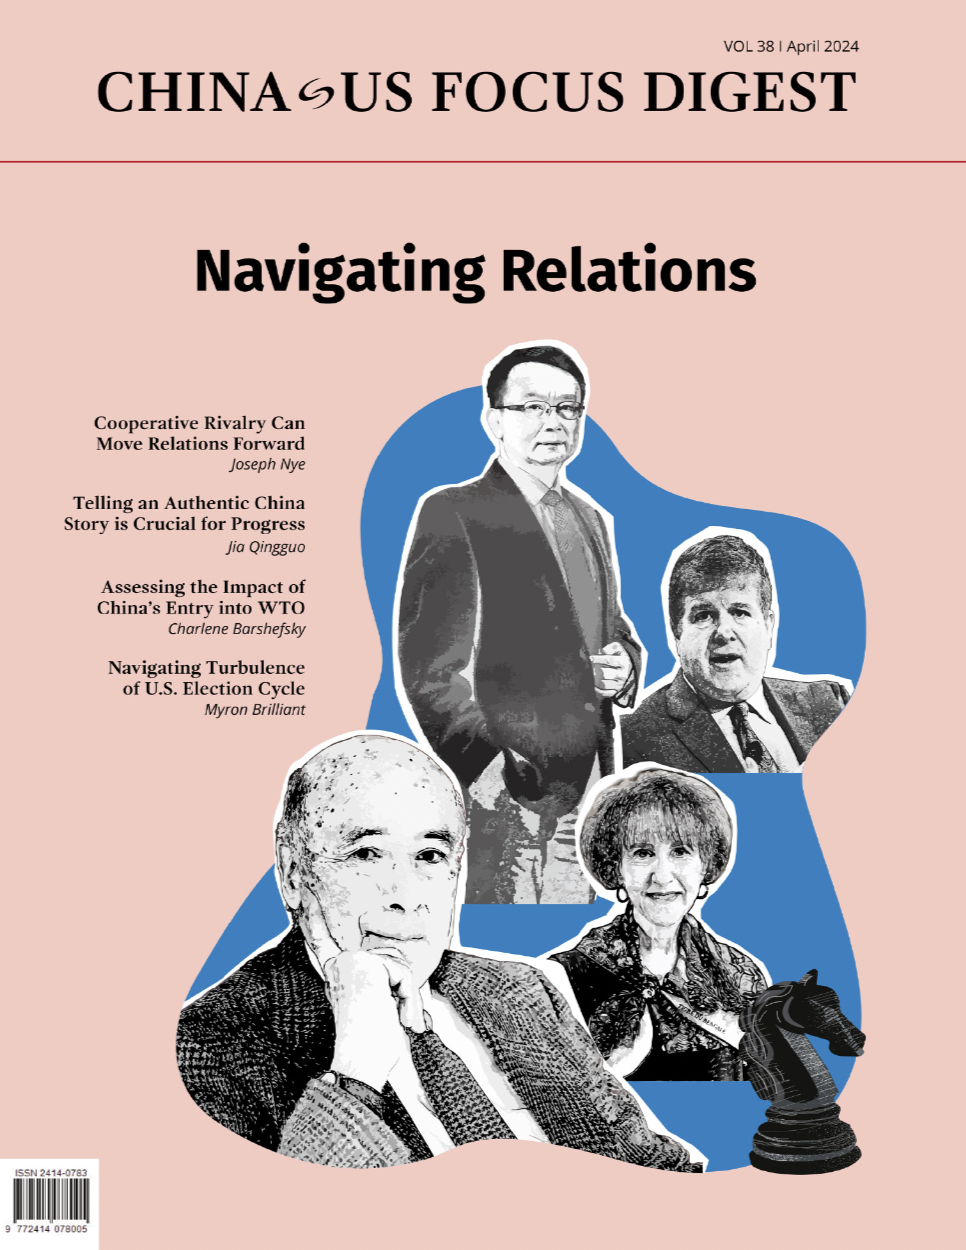 Digest: Navigating Relations